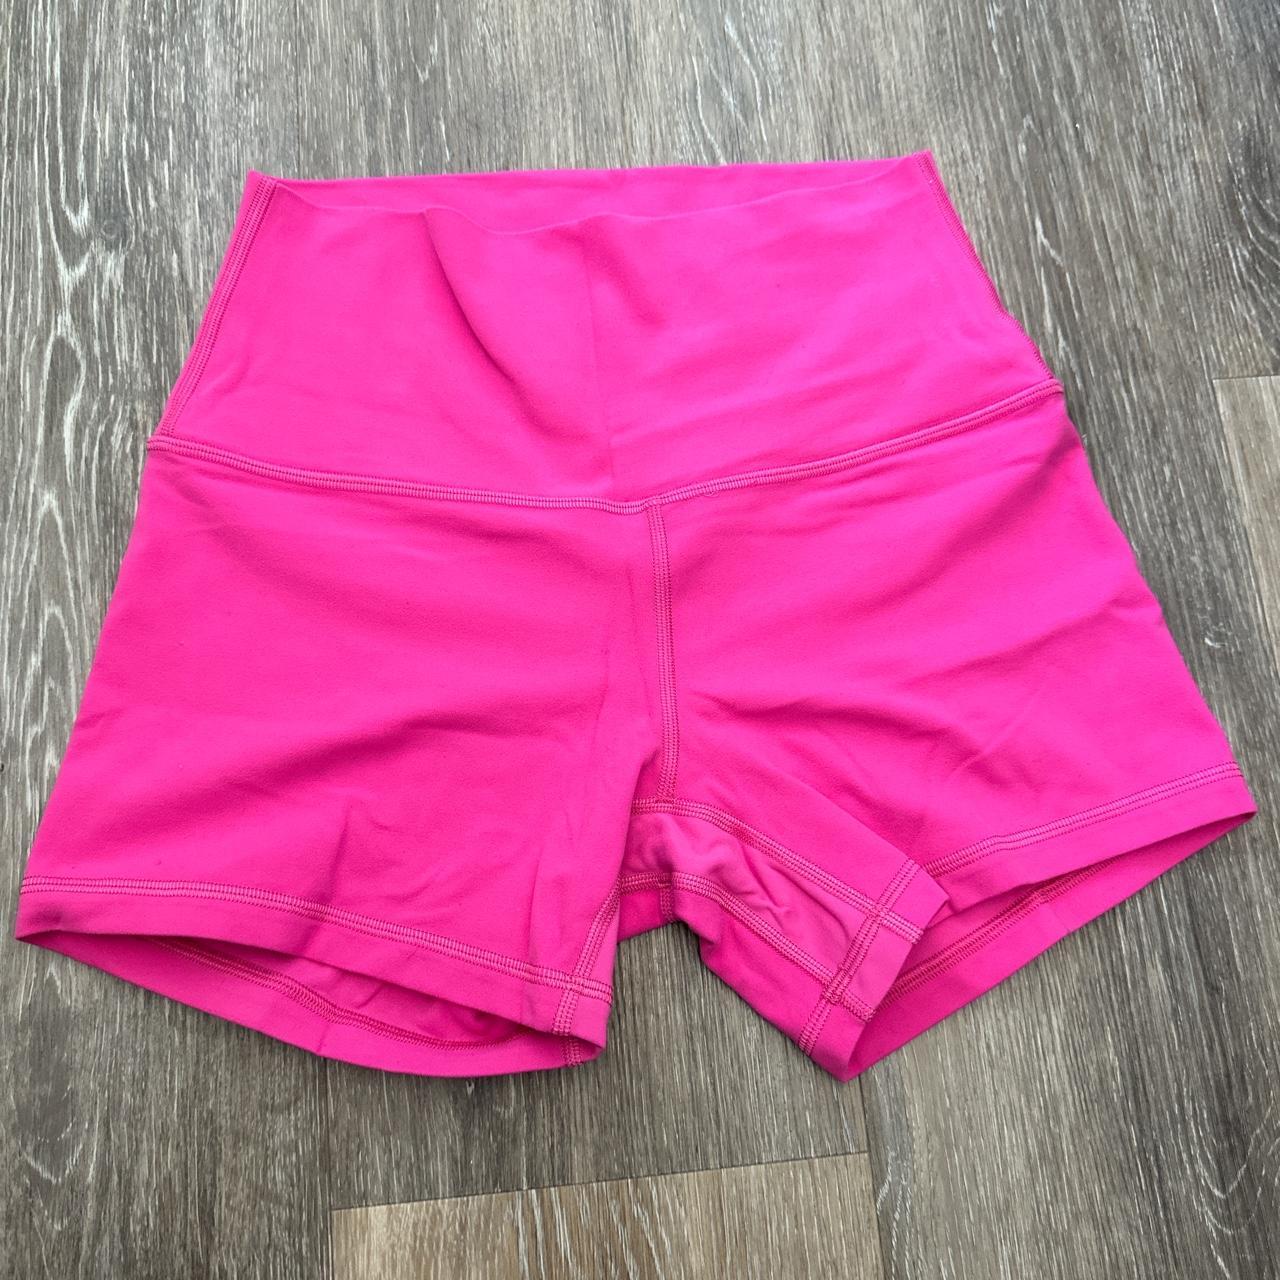 sonic pink biker shorts lululemon aligns 4” worn a... - Depop